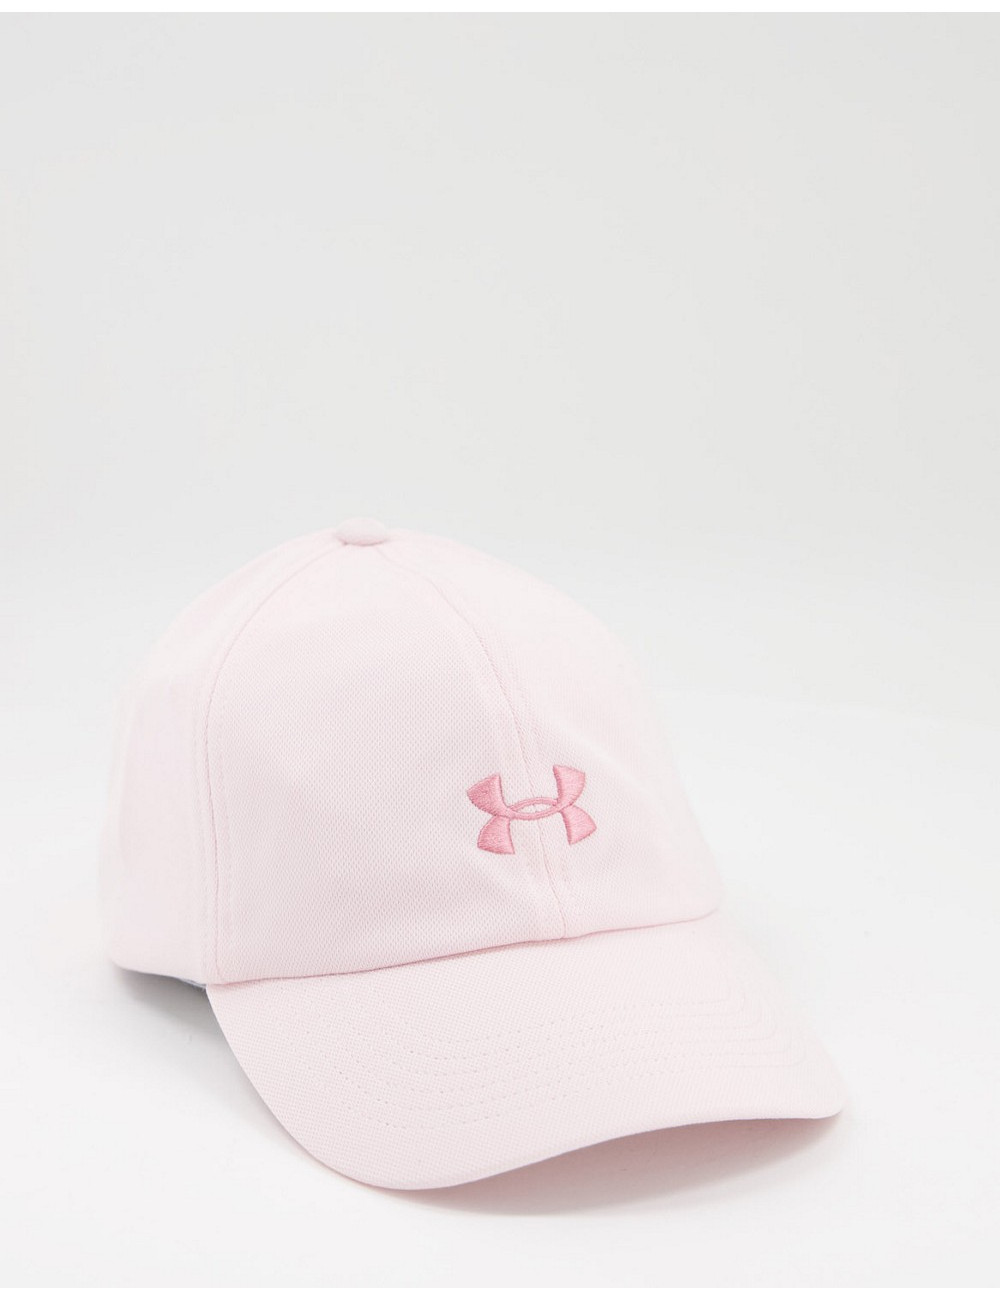 Under Armour logo cap in pink